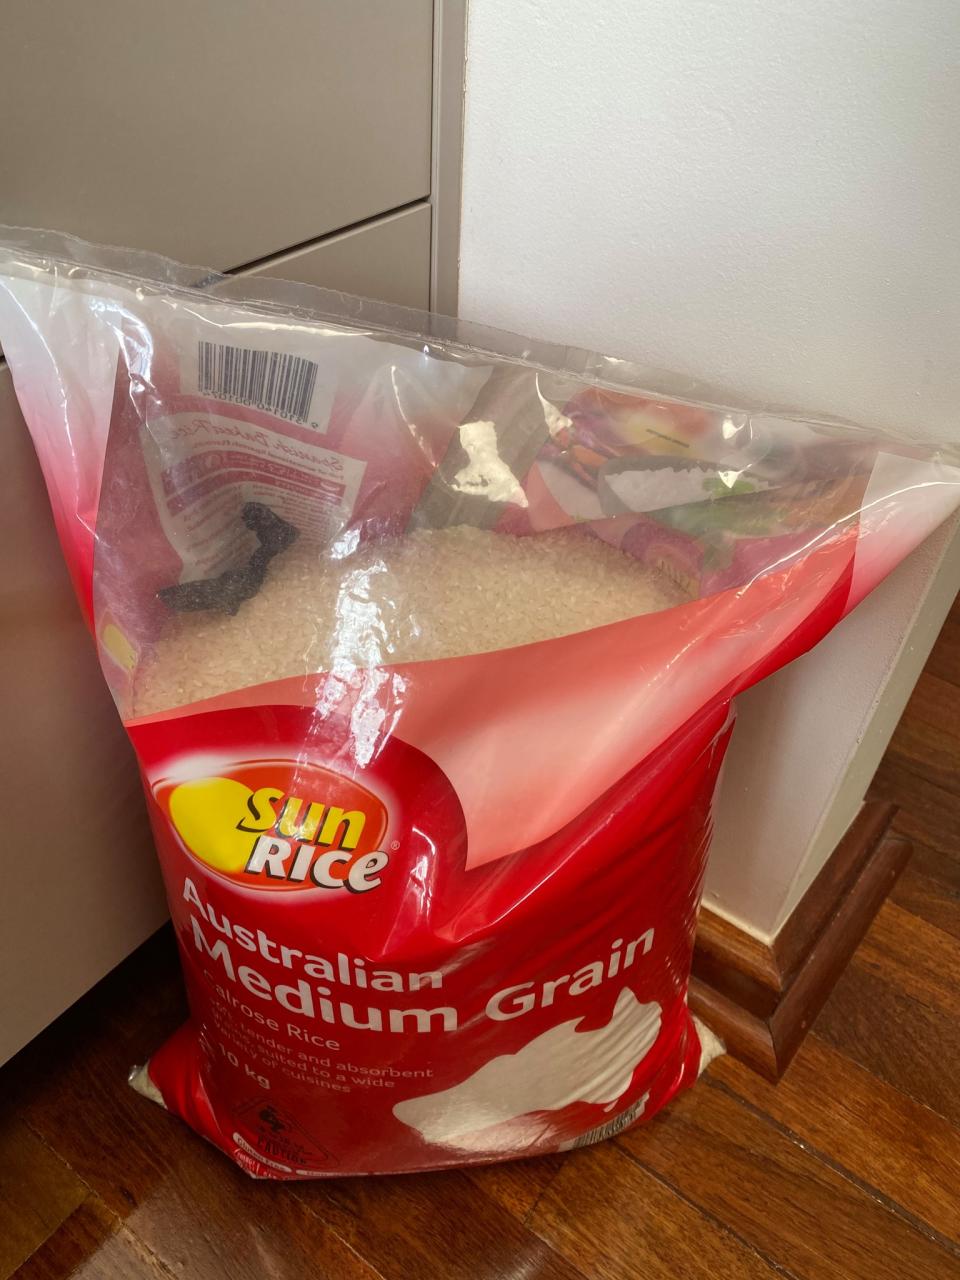 A sealed bag of Sunrice Australian Medium Grain rice with a butterfly inside. 